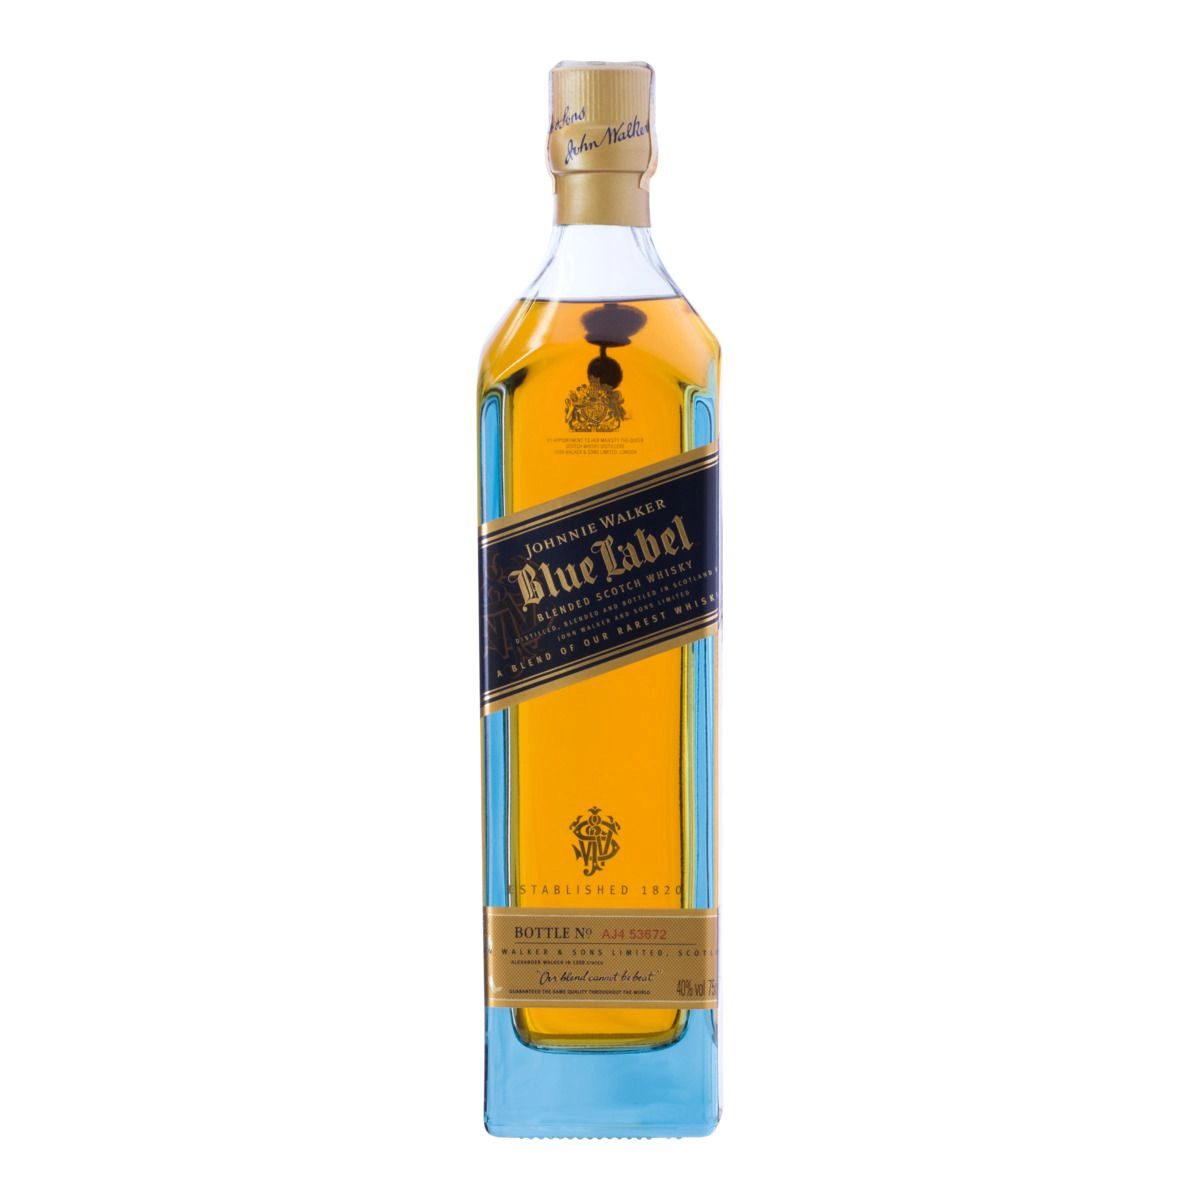 Whisky Escocês Johnnie Walker Blue Label Garrafa 750ml